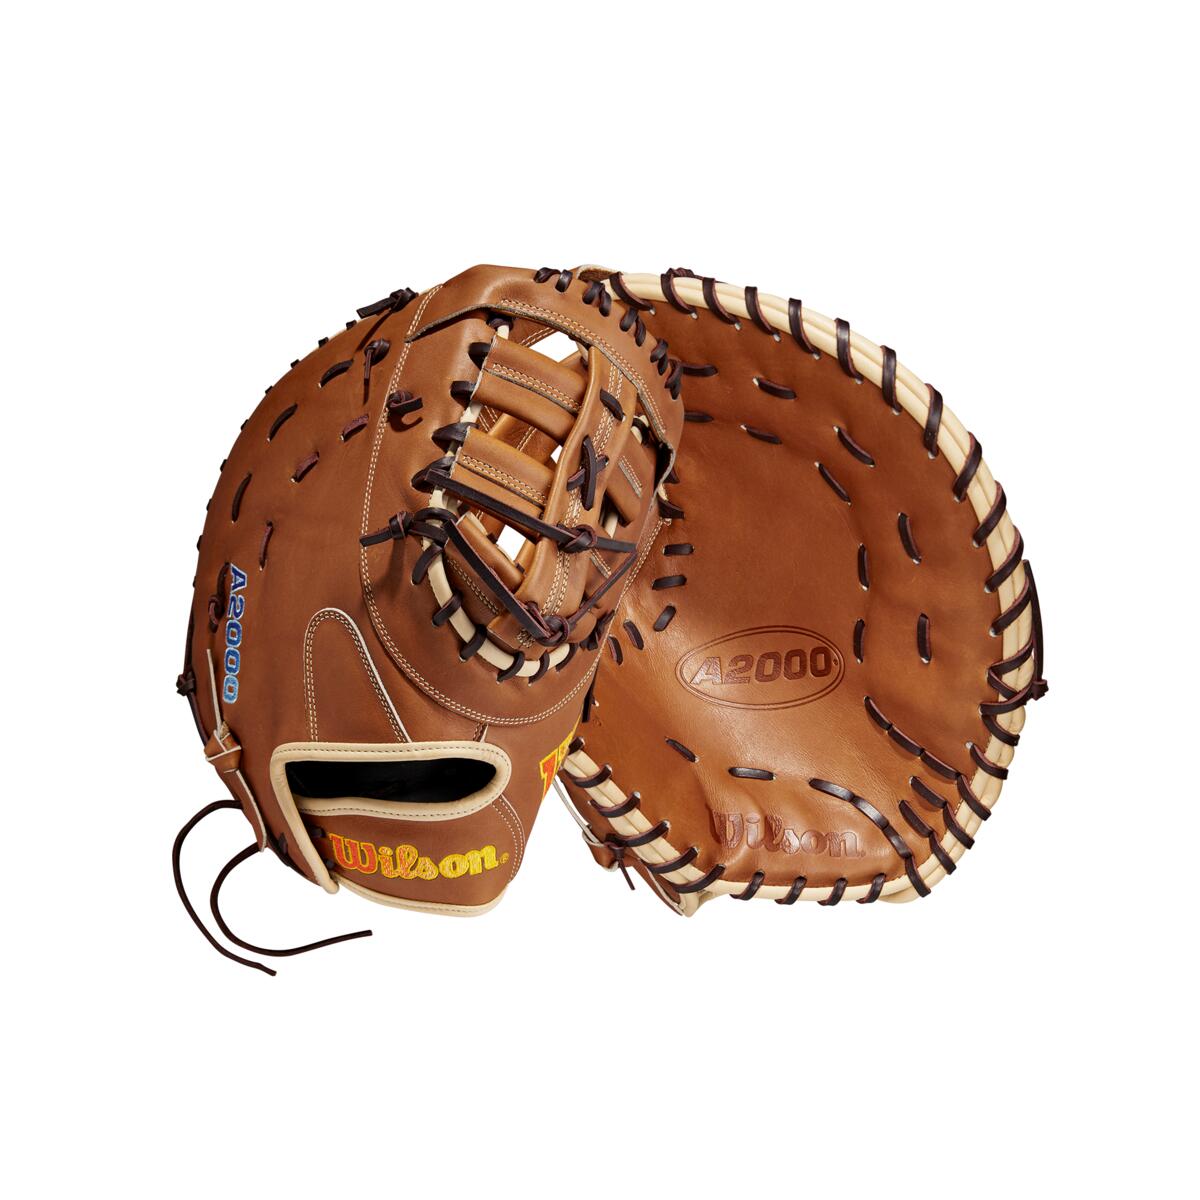 Houston Astros Stitched Baseball Short Sleeve Snapper 24M / White